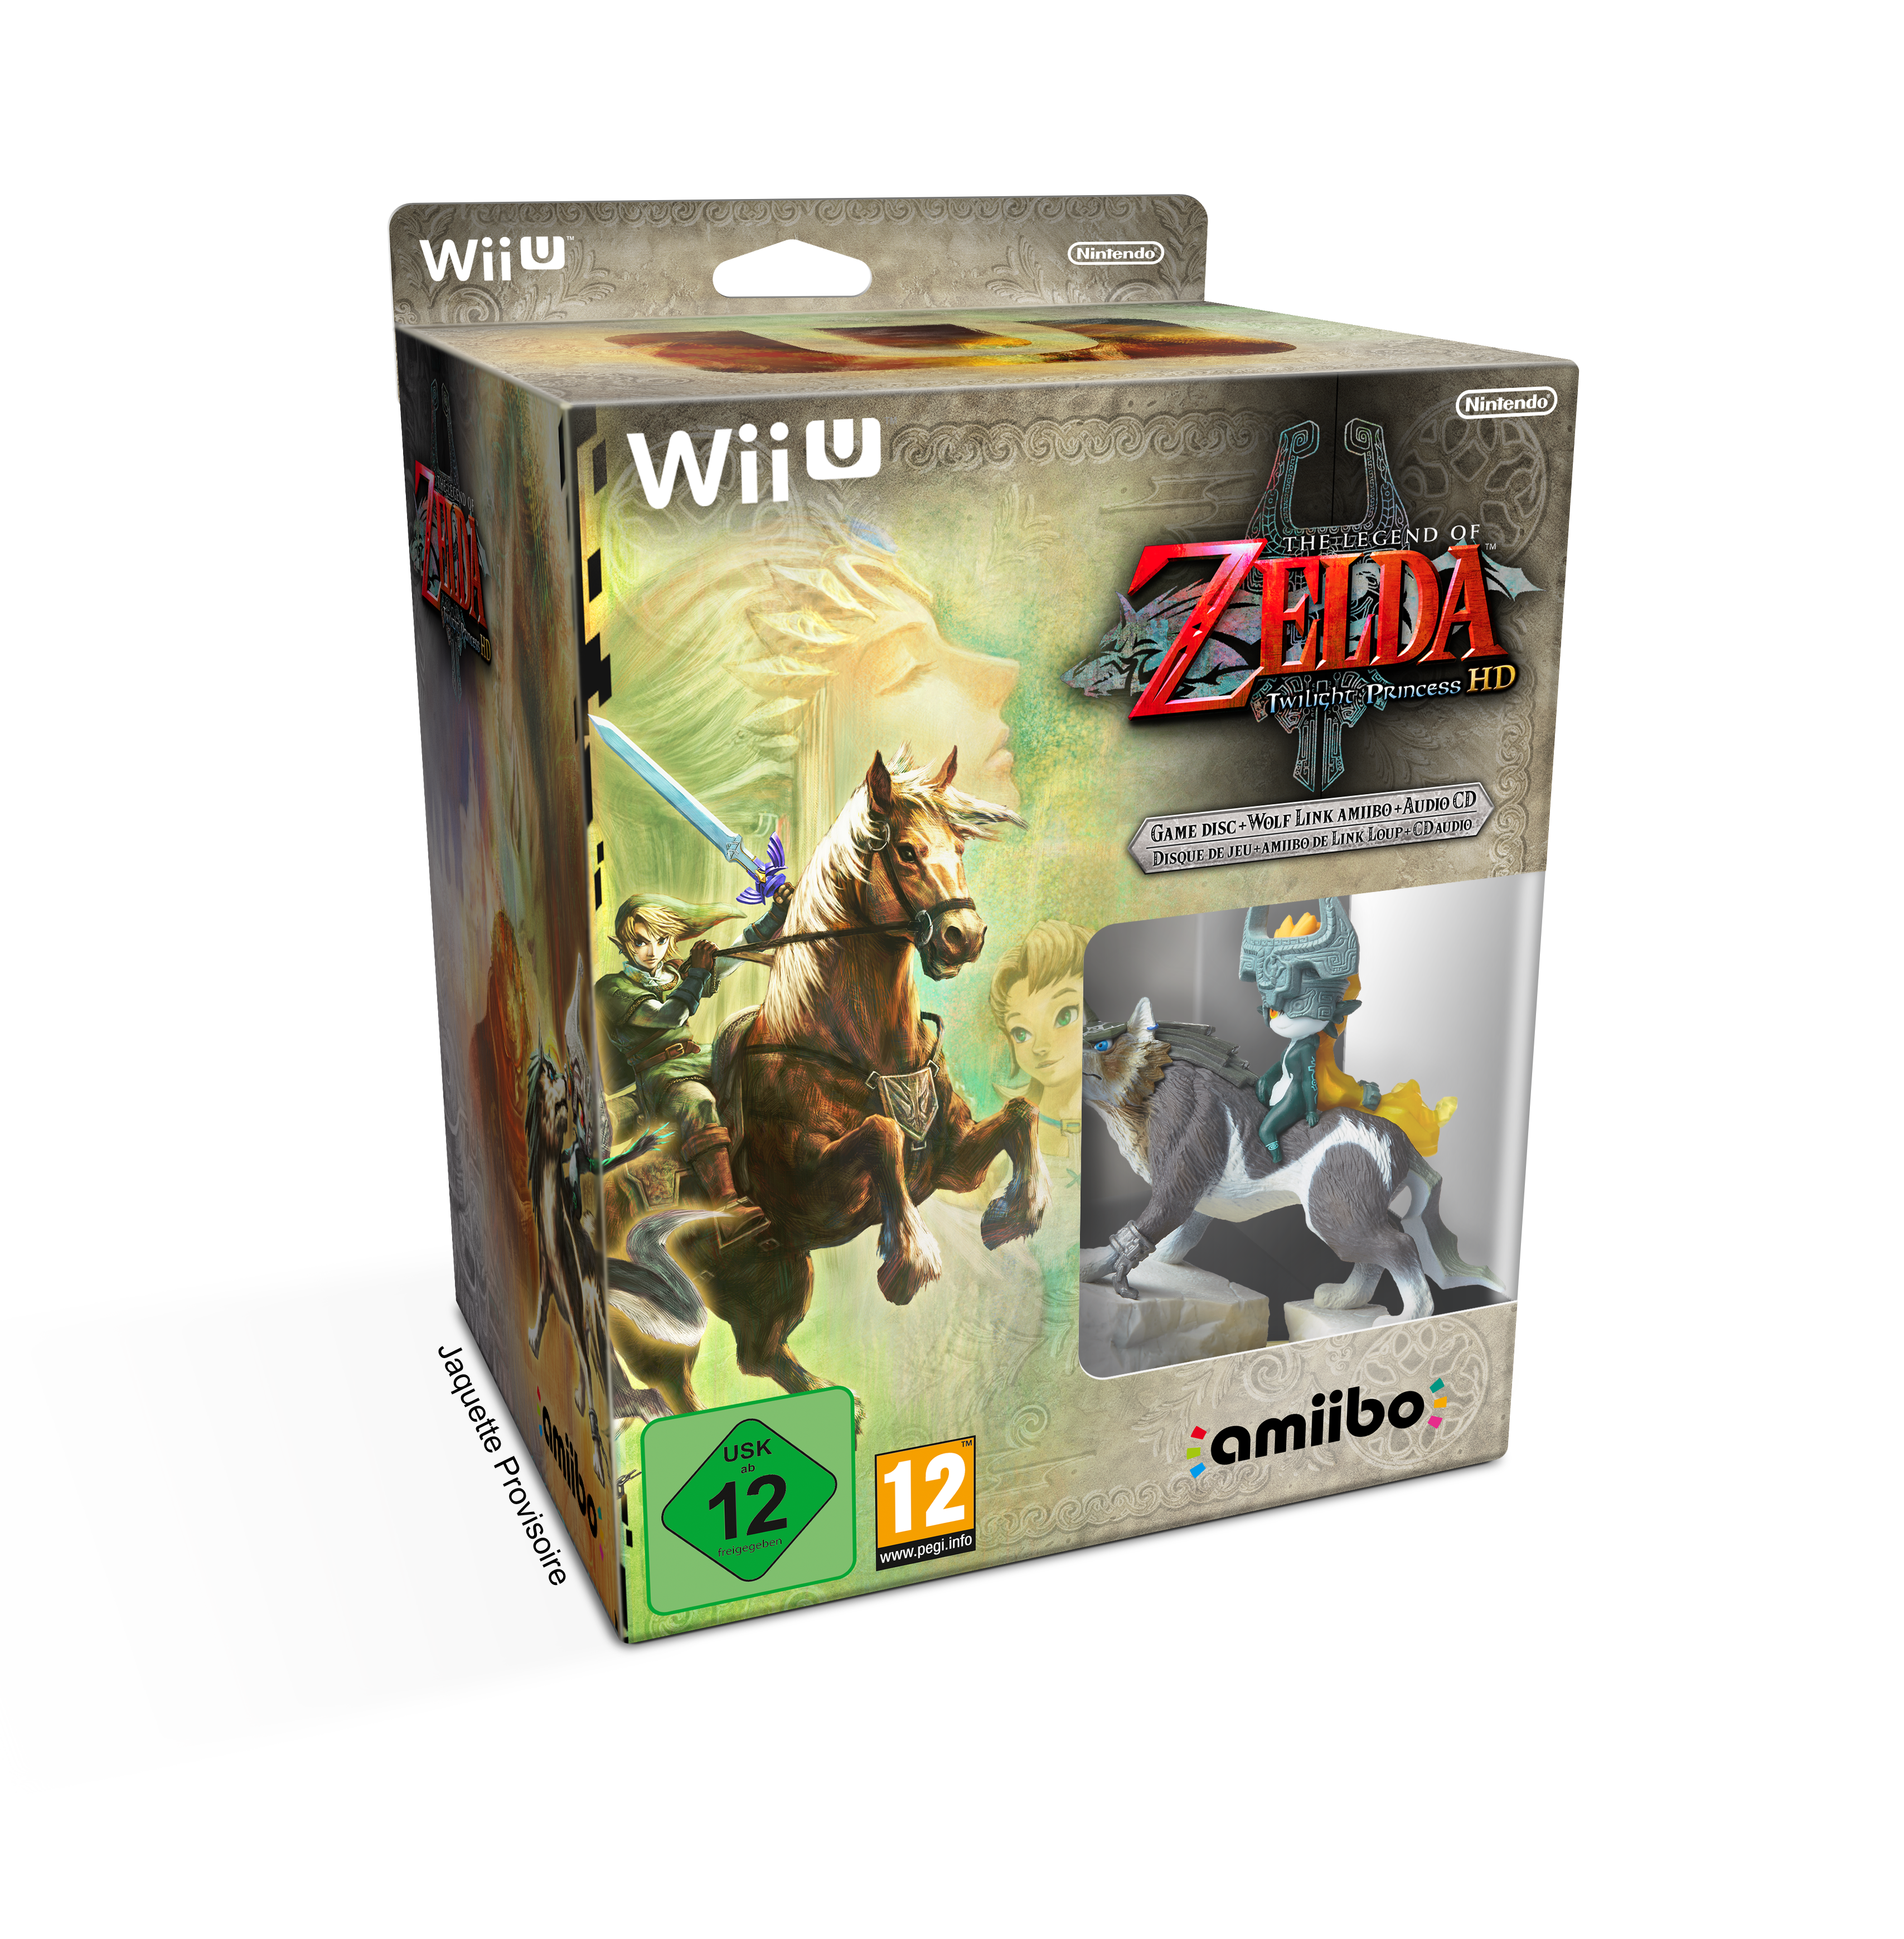 The Legend of Zelda Twilight Princess HD pack